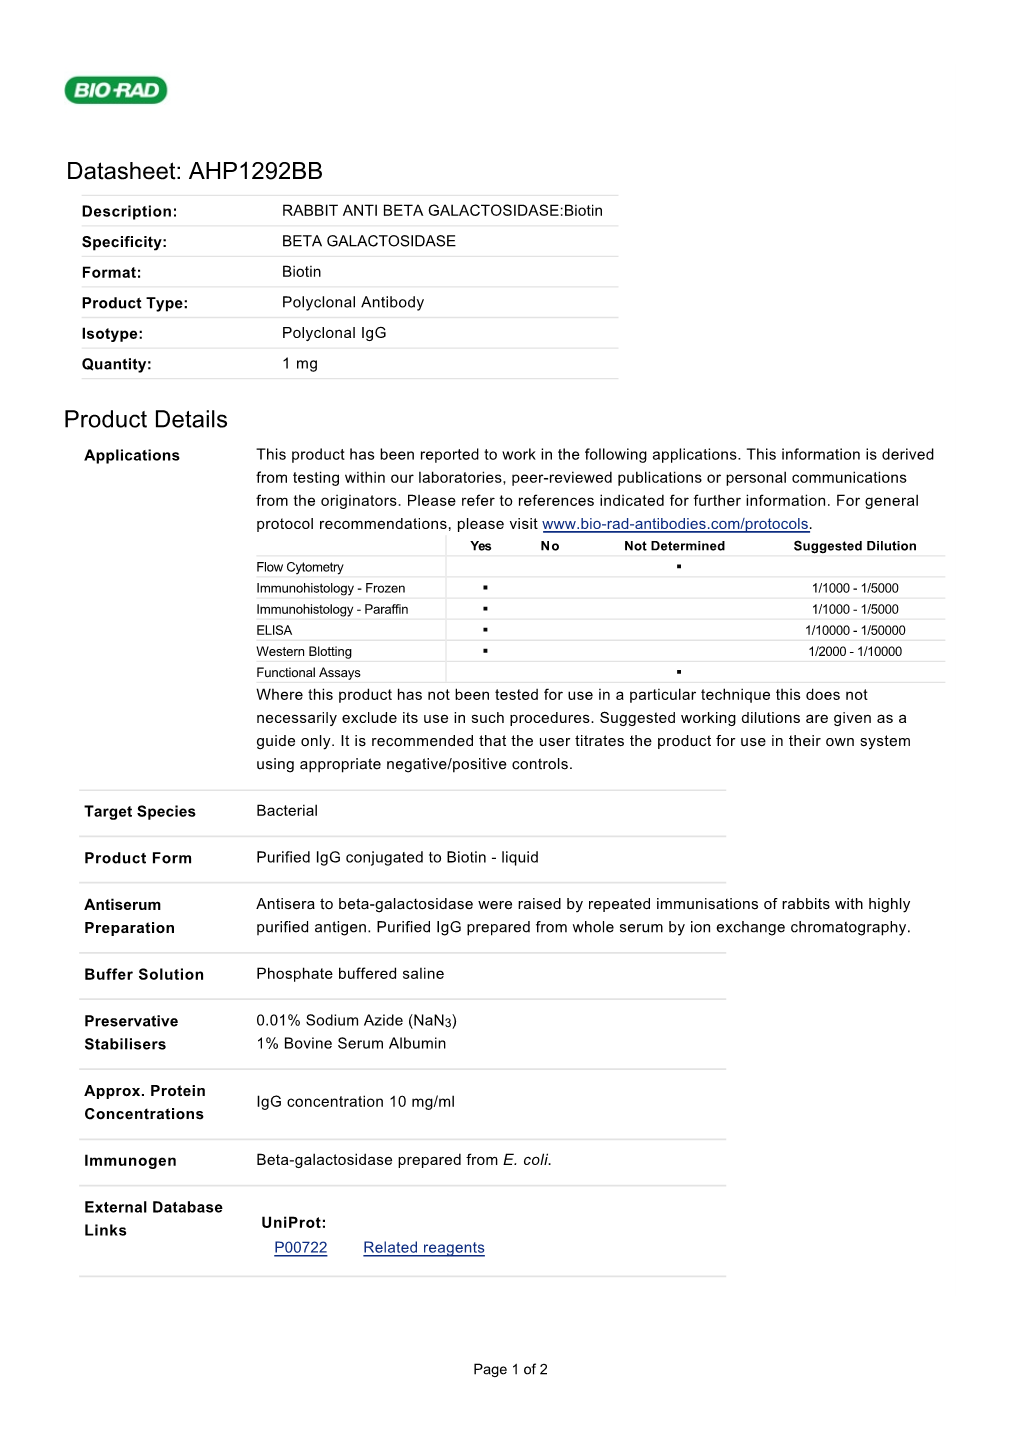 Datasheet: AHP1292BB Product Details